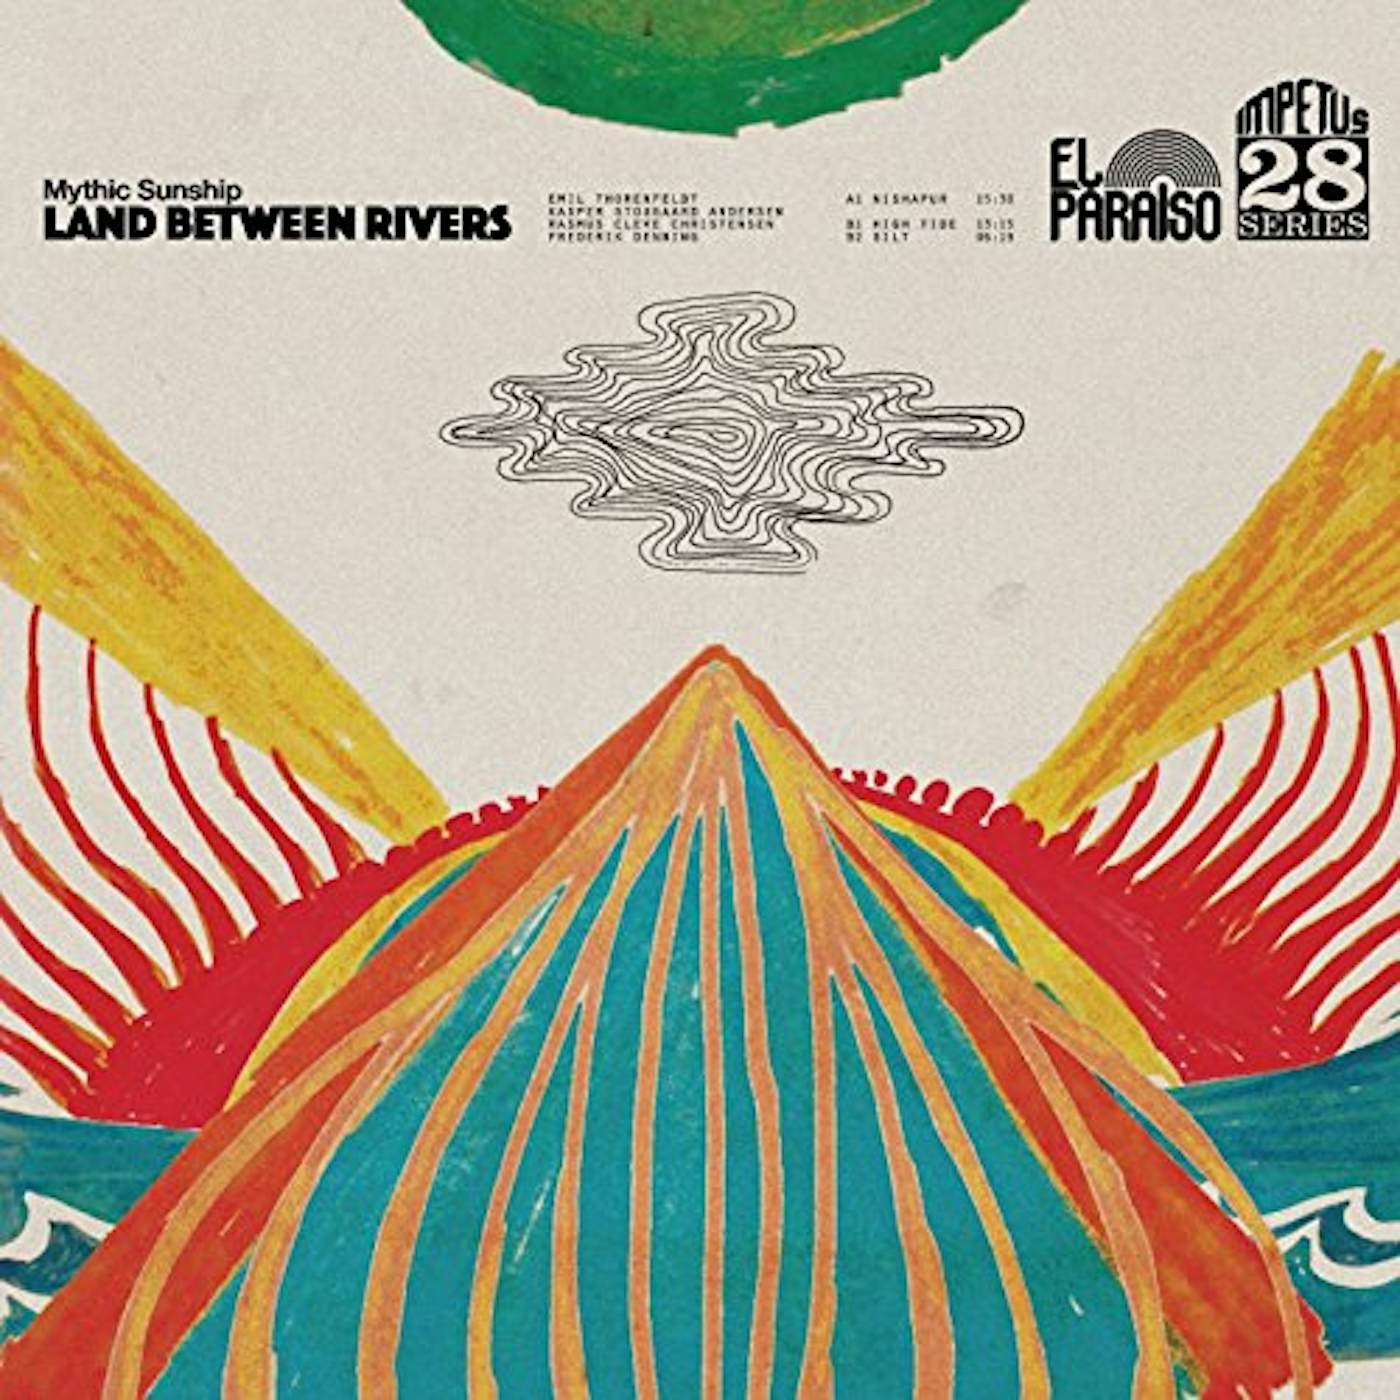 Mythic Sunship LAND BETWEEN RIVERS CD